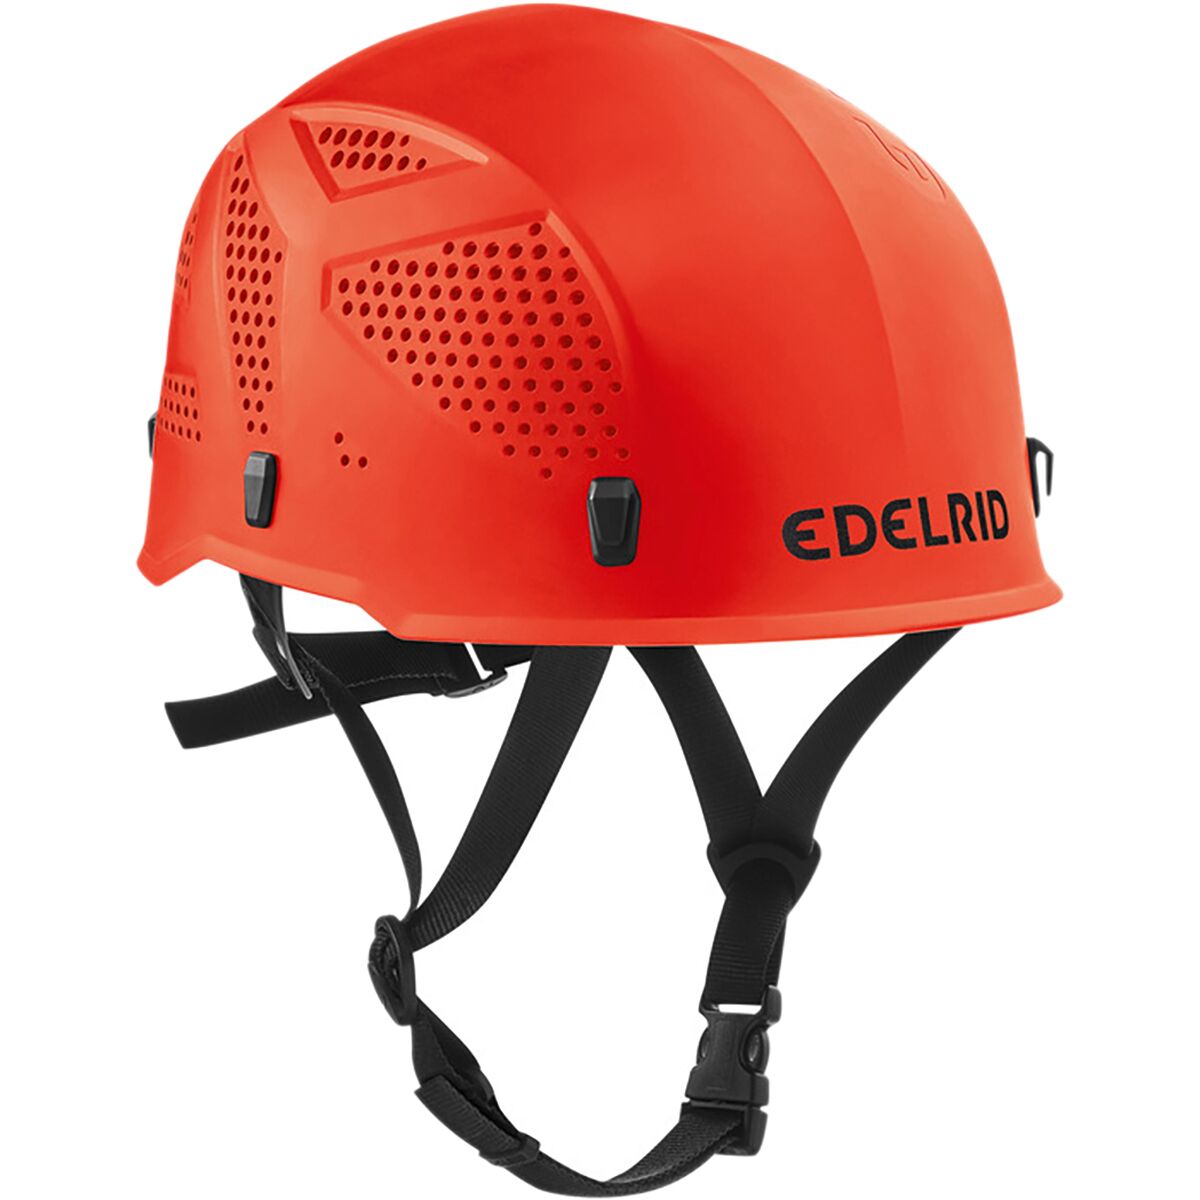 Edelrid Ultralight III Climbing Helmet